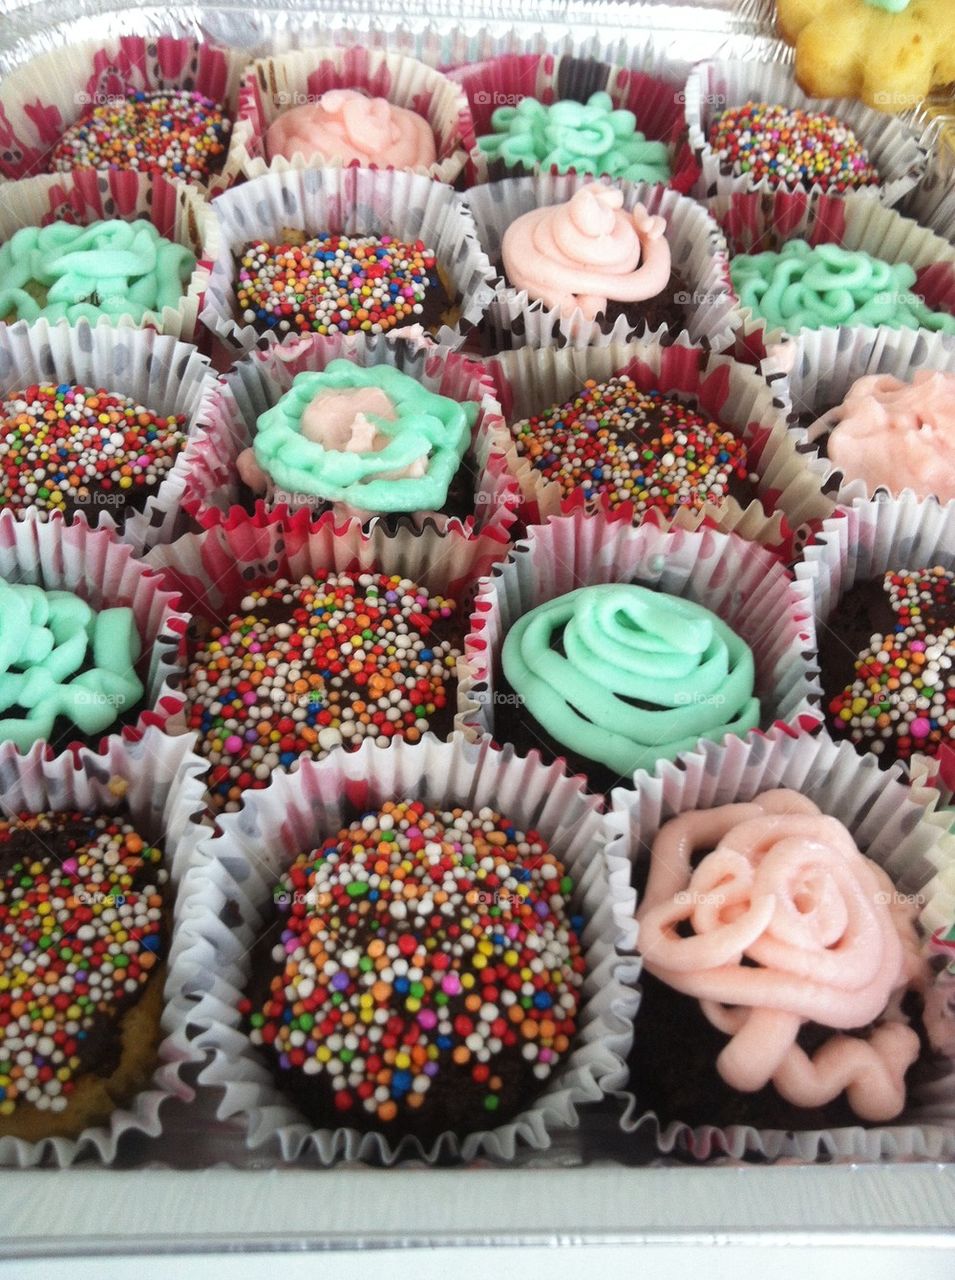 Cupcakes 🍩